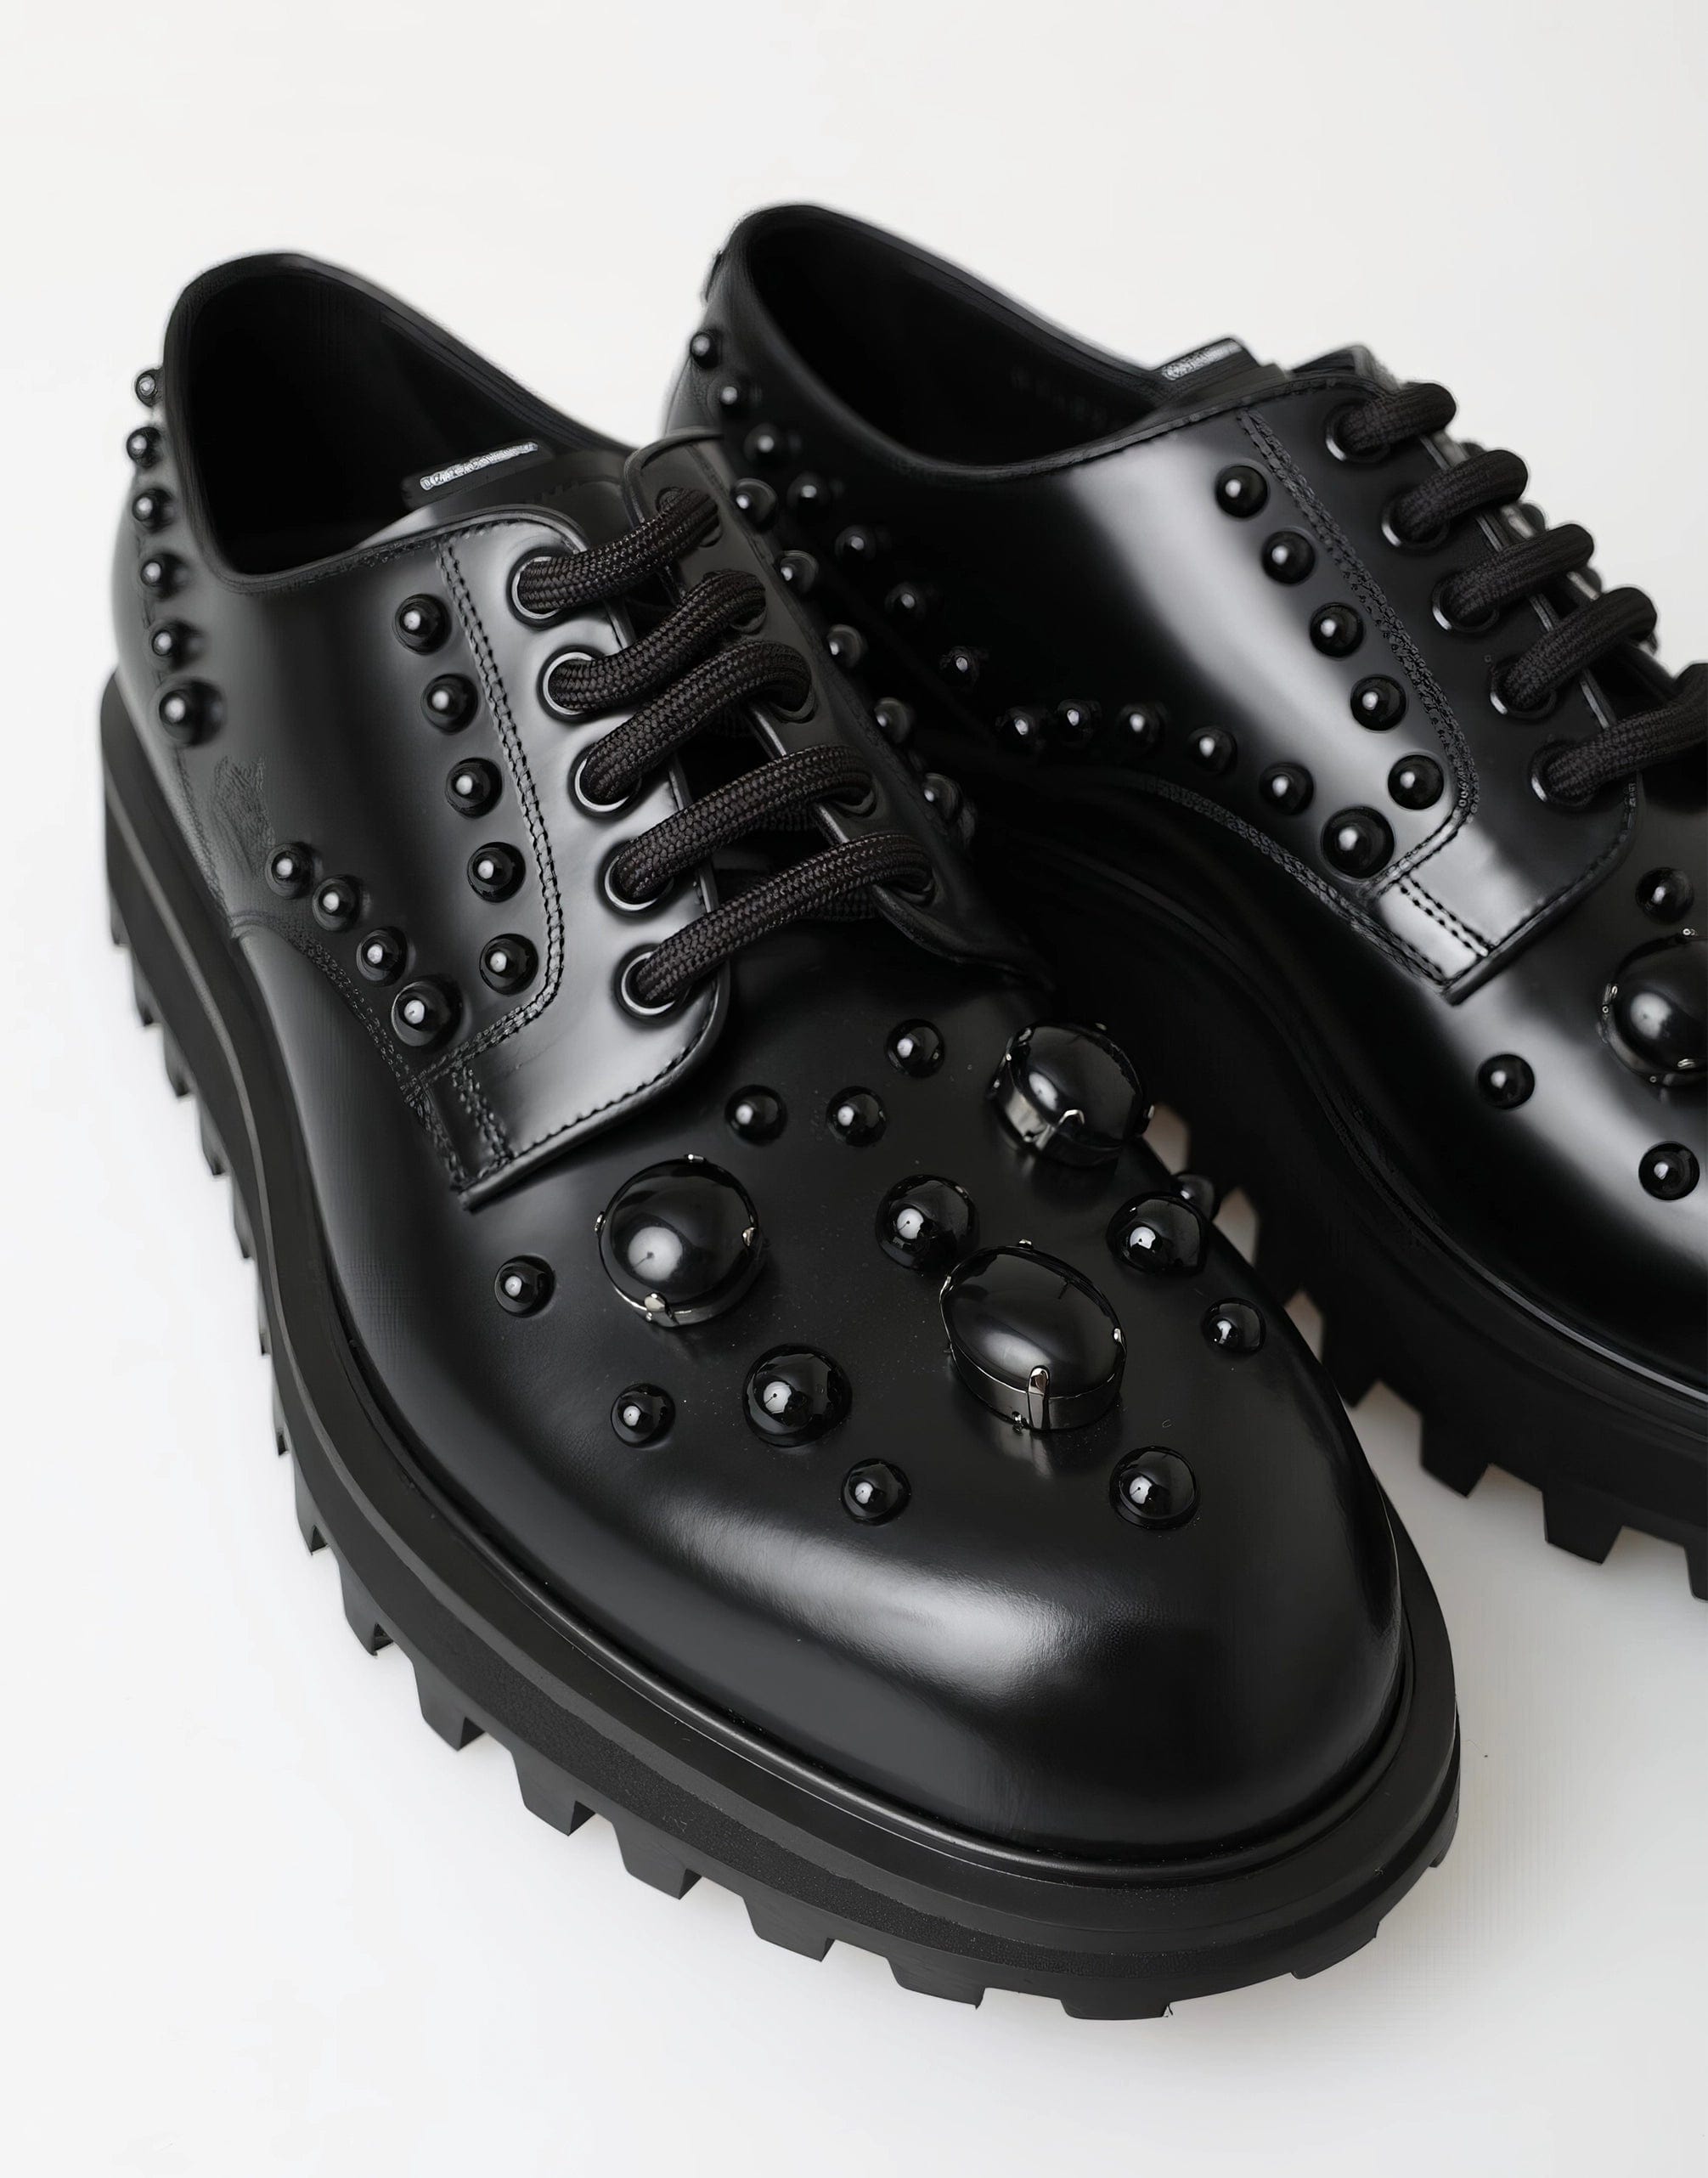 Dolce & Gabbana Black Leather Crystal Studded Dress Shoes